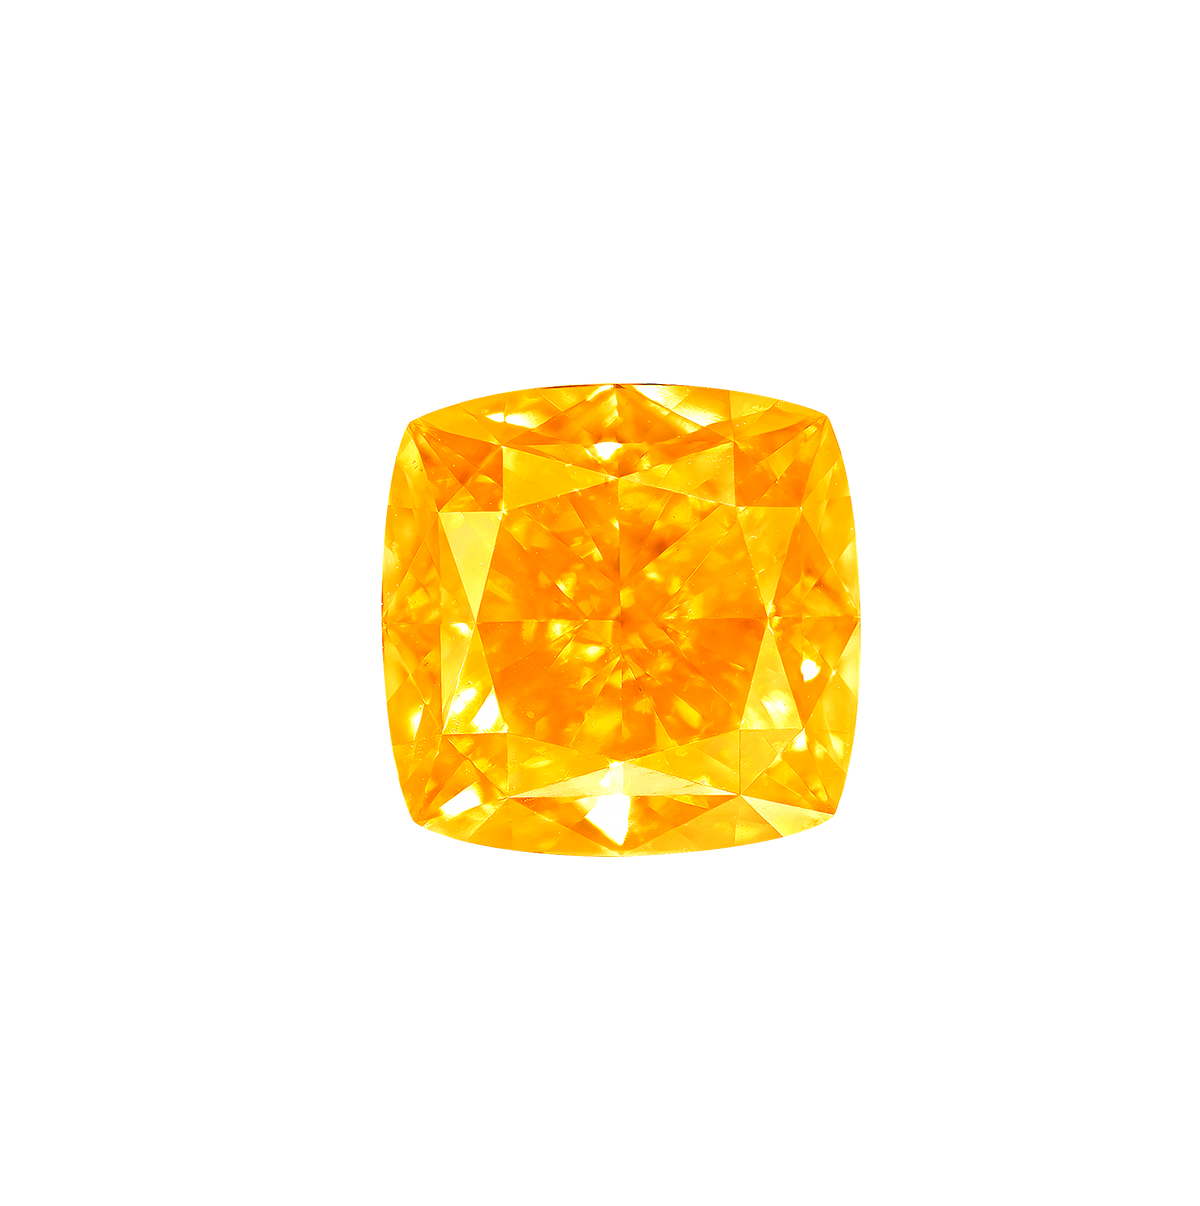 GIA 2.01 克拉 艷彩黃橘彩鑽裸石
UNMOUNTED FANCY VIVID 
YELLOW-ORANGE DIAMOND